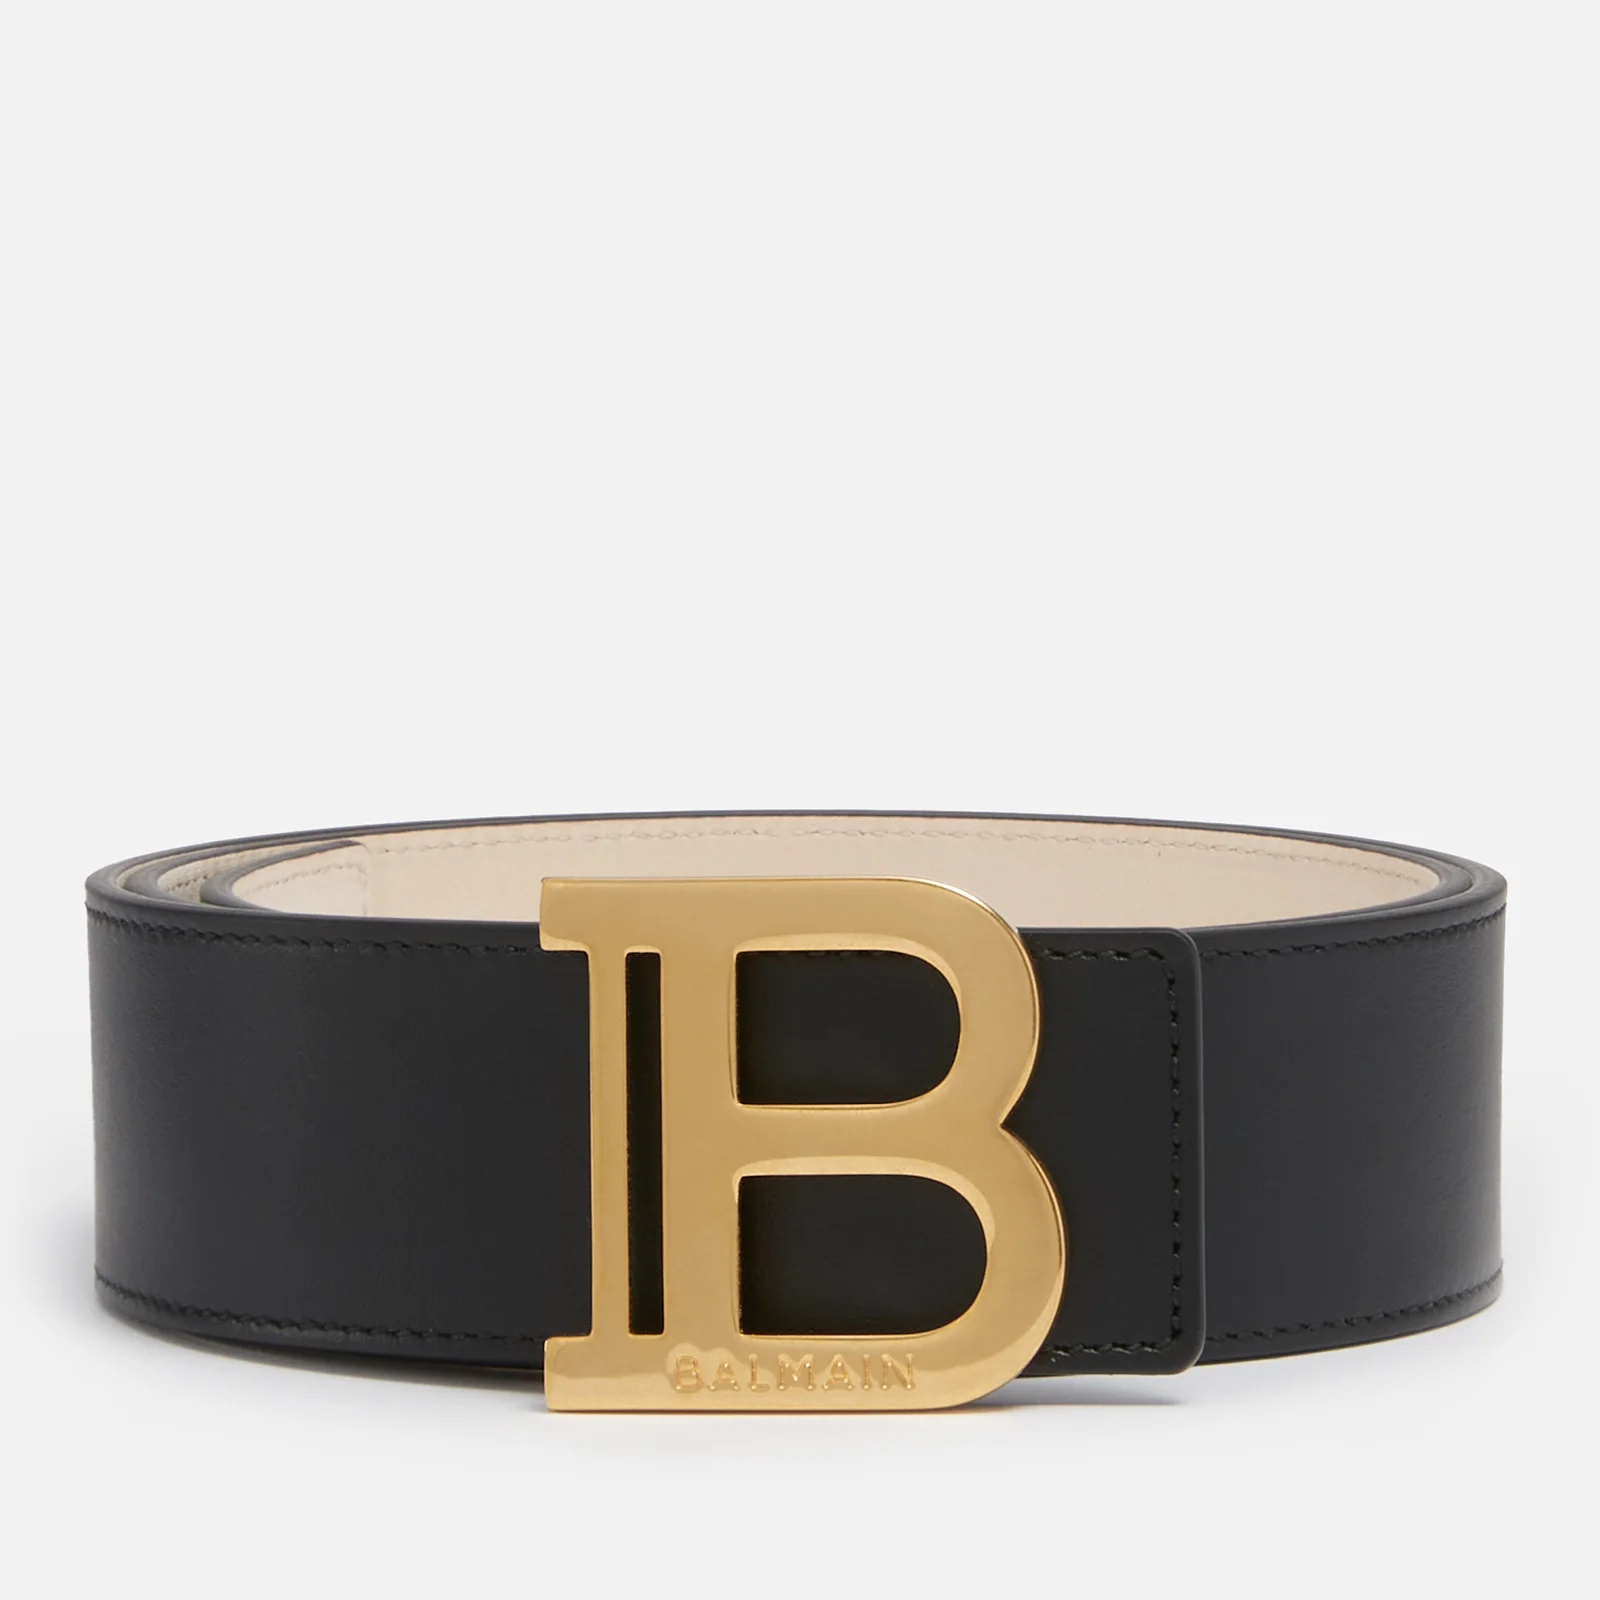 Balmain Women's B-Belt 4cm Belt - Black Image 1